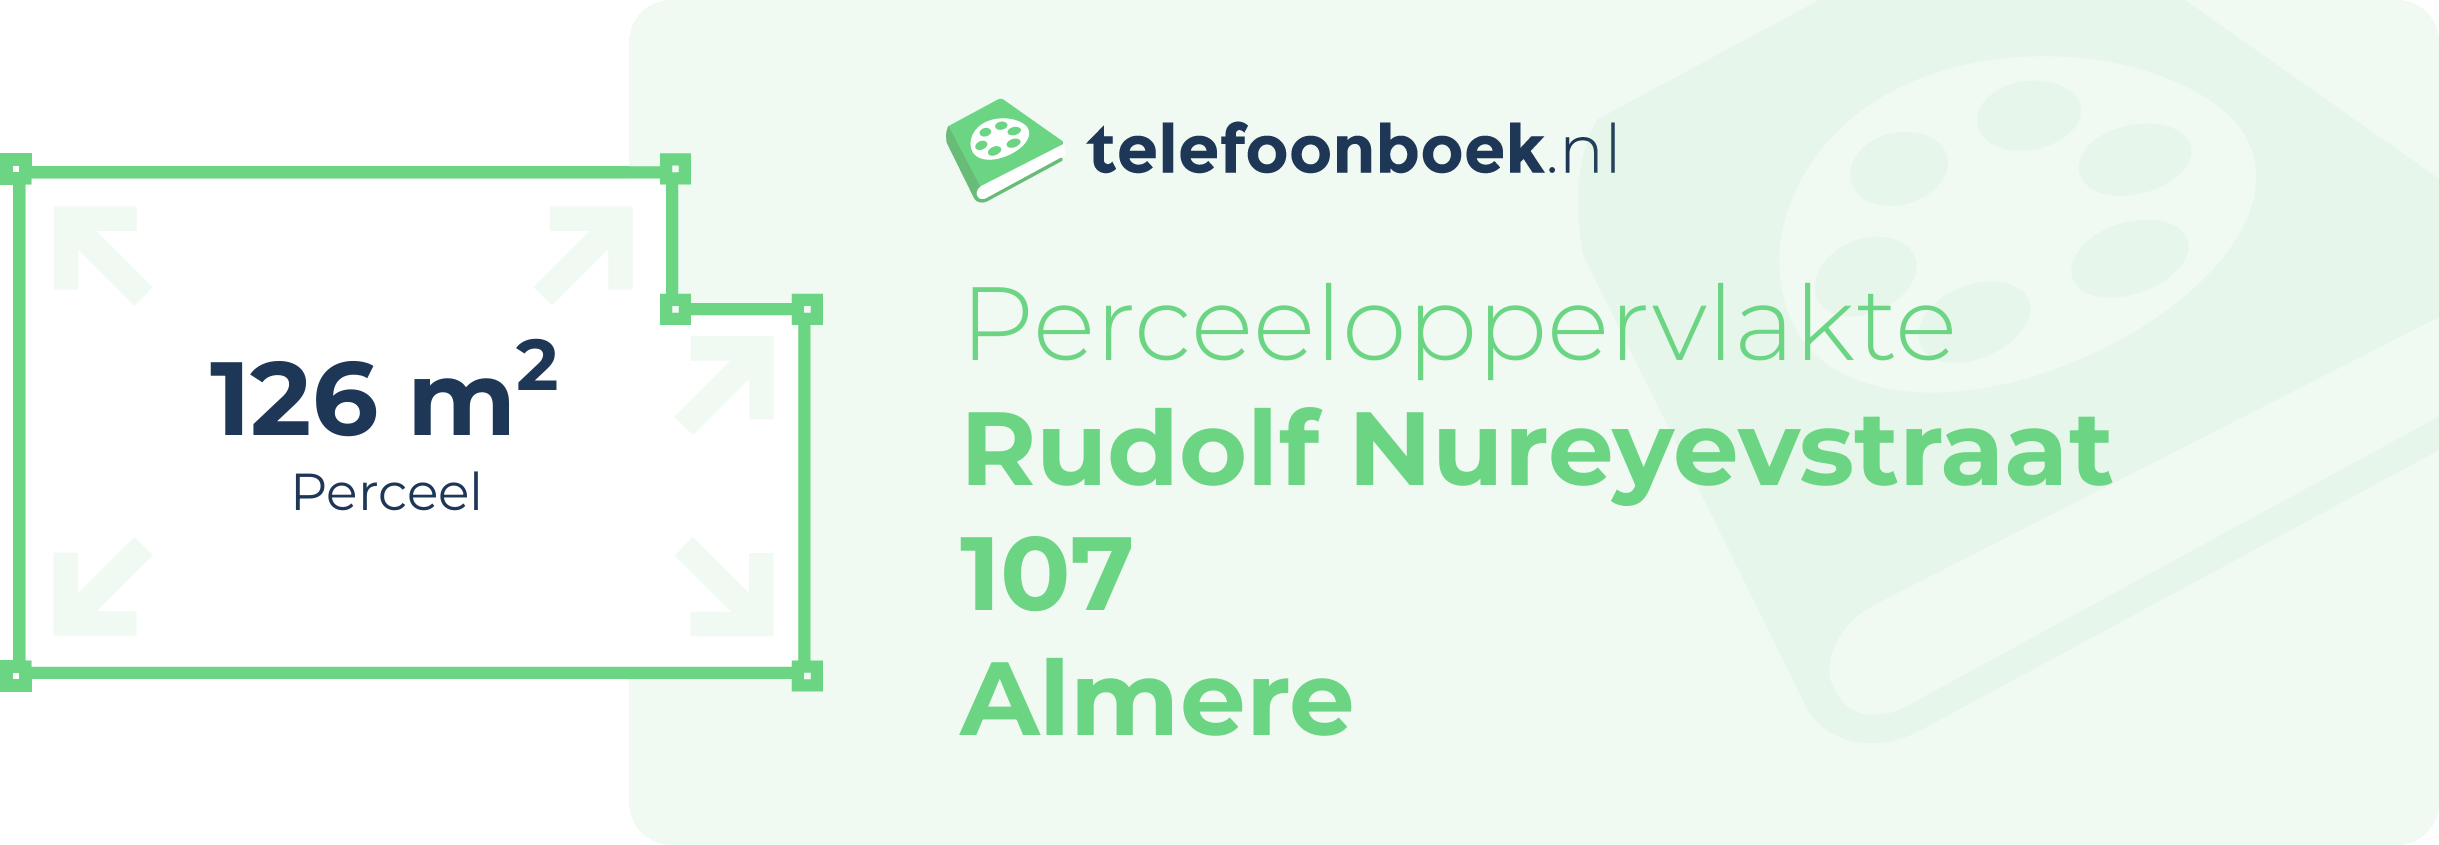 Perceeloppervlakte Rudolf Nureyevstraat 107 Almere